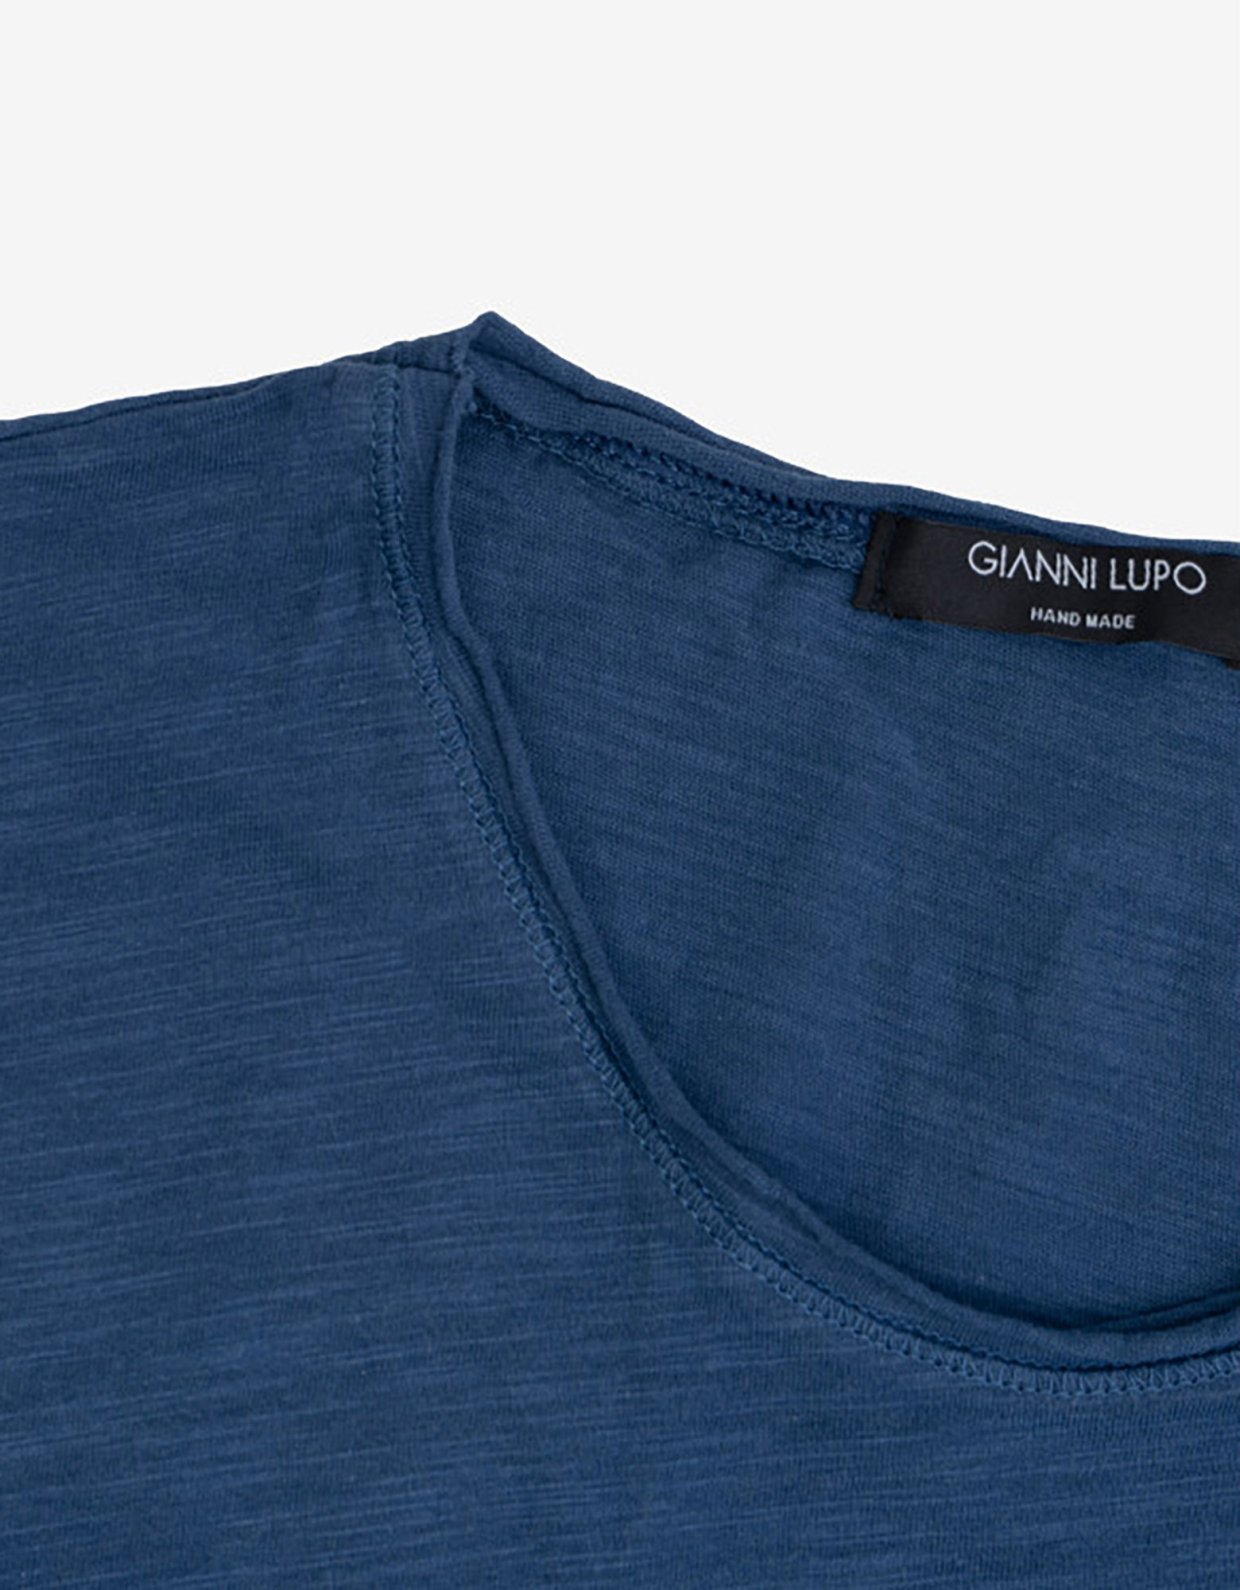 Gianni Lupo T-shirt blue